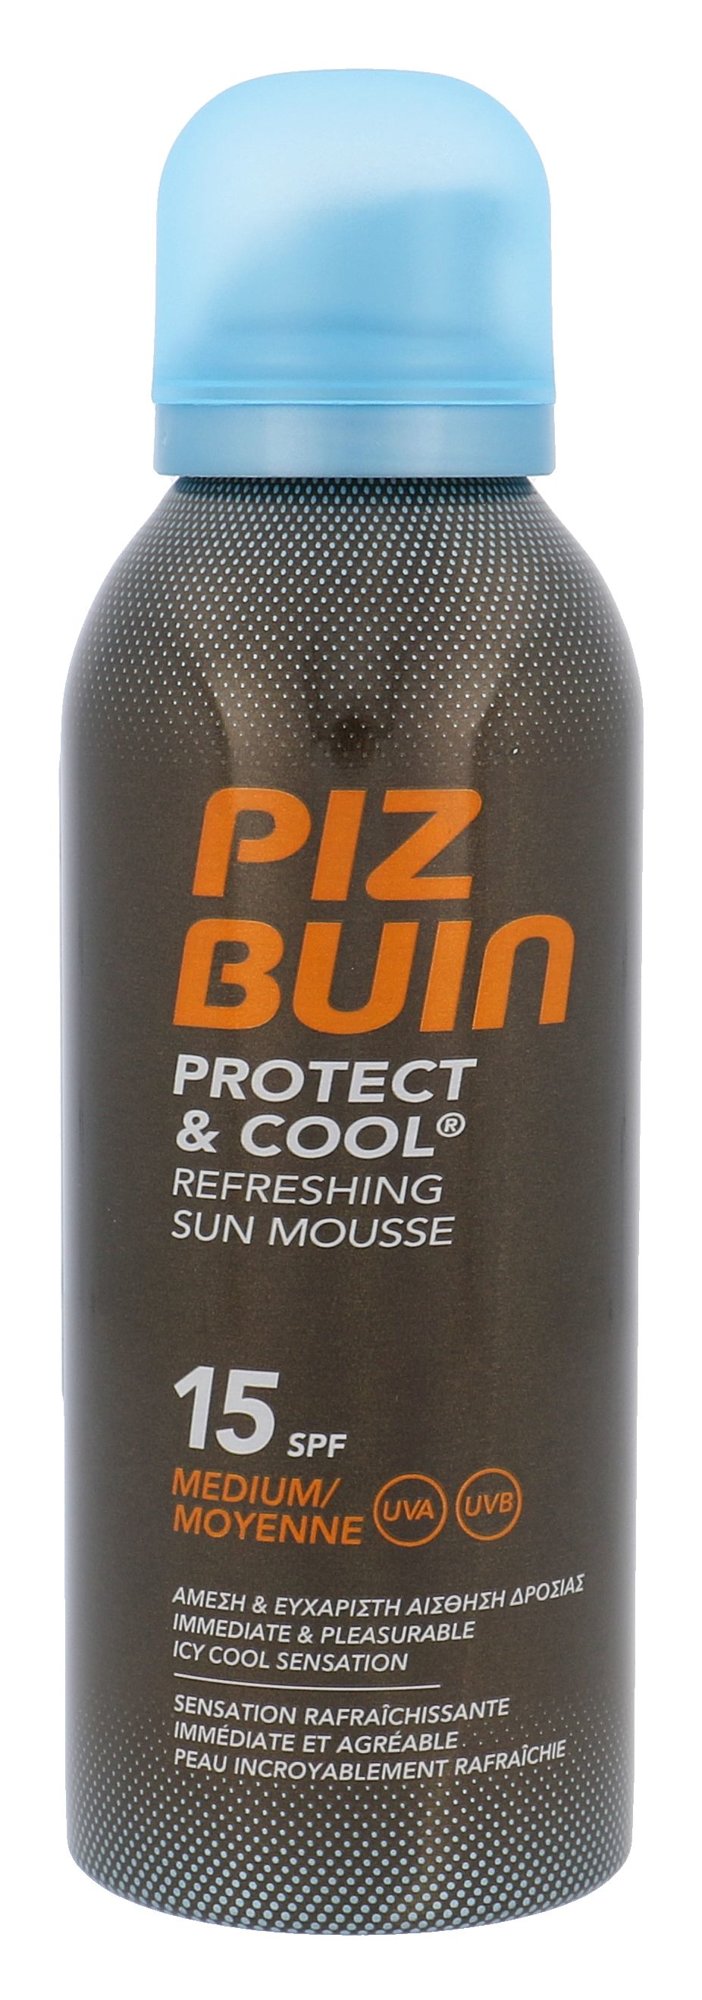 PIZ BUIN Protect & Cool